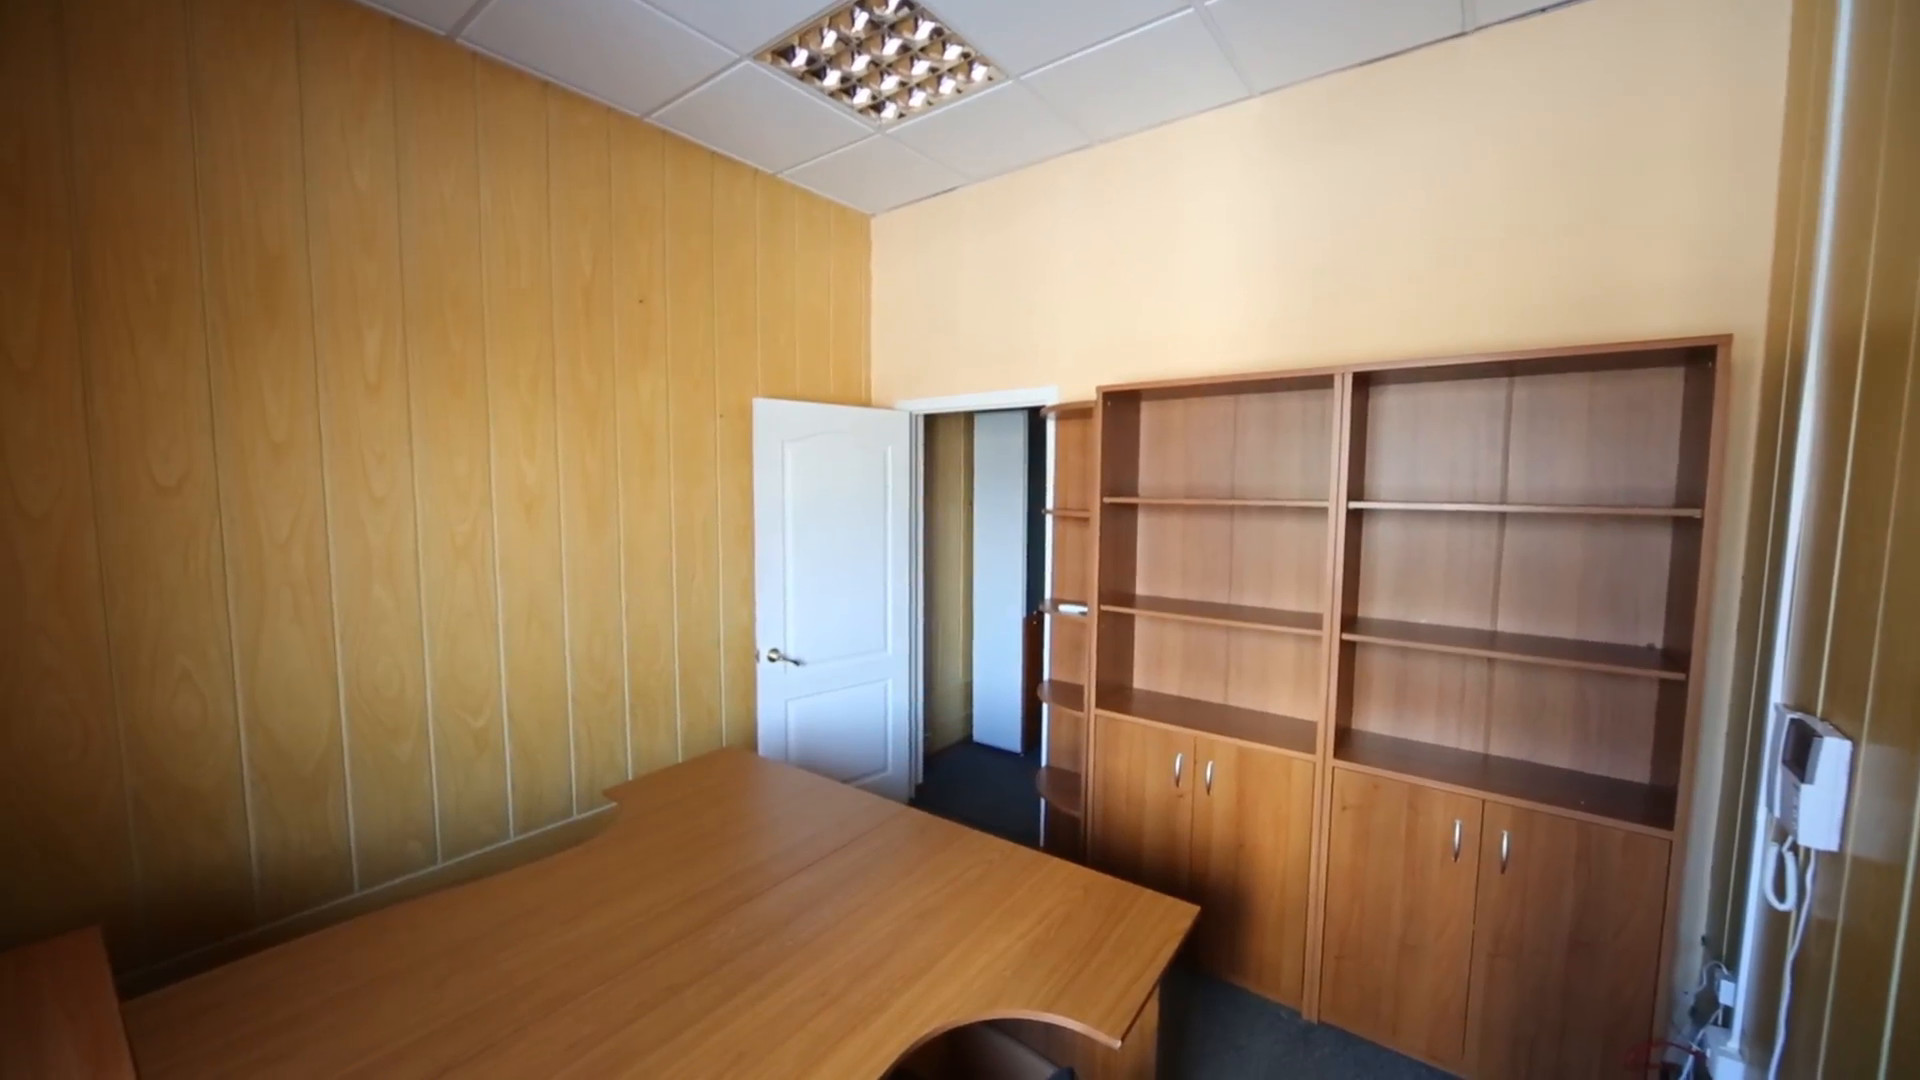 empty office wallpaper,room,property,interior design,ceiling,building